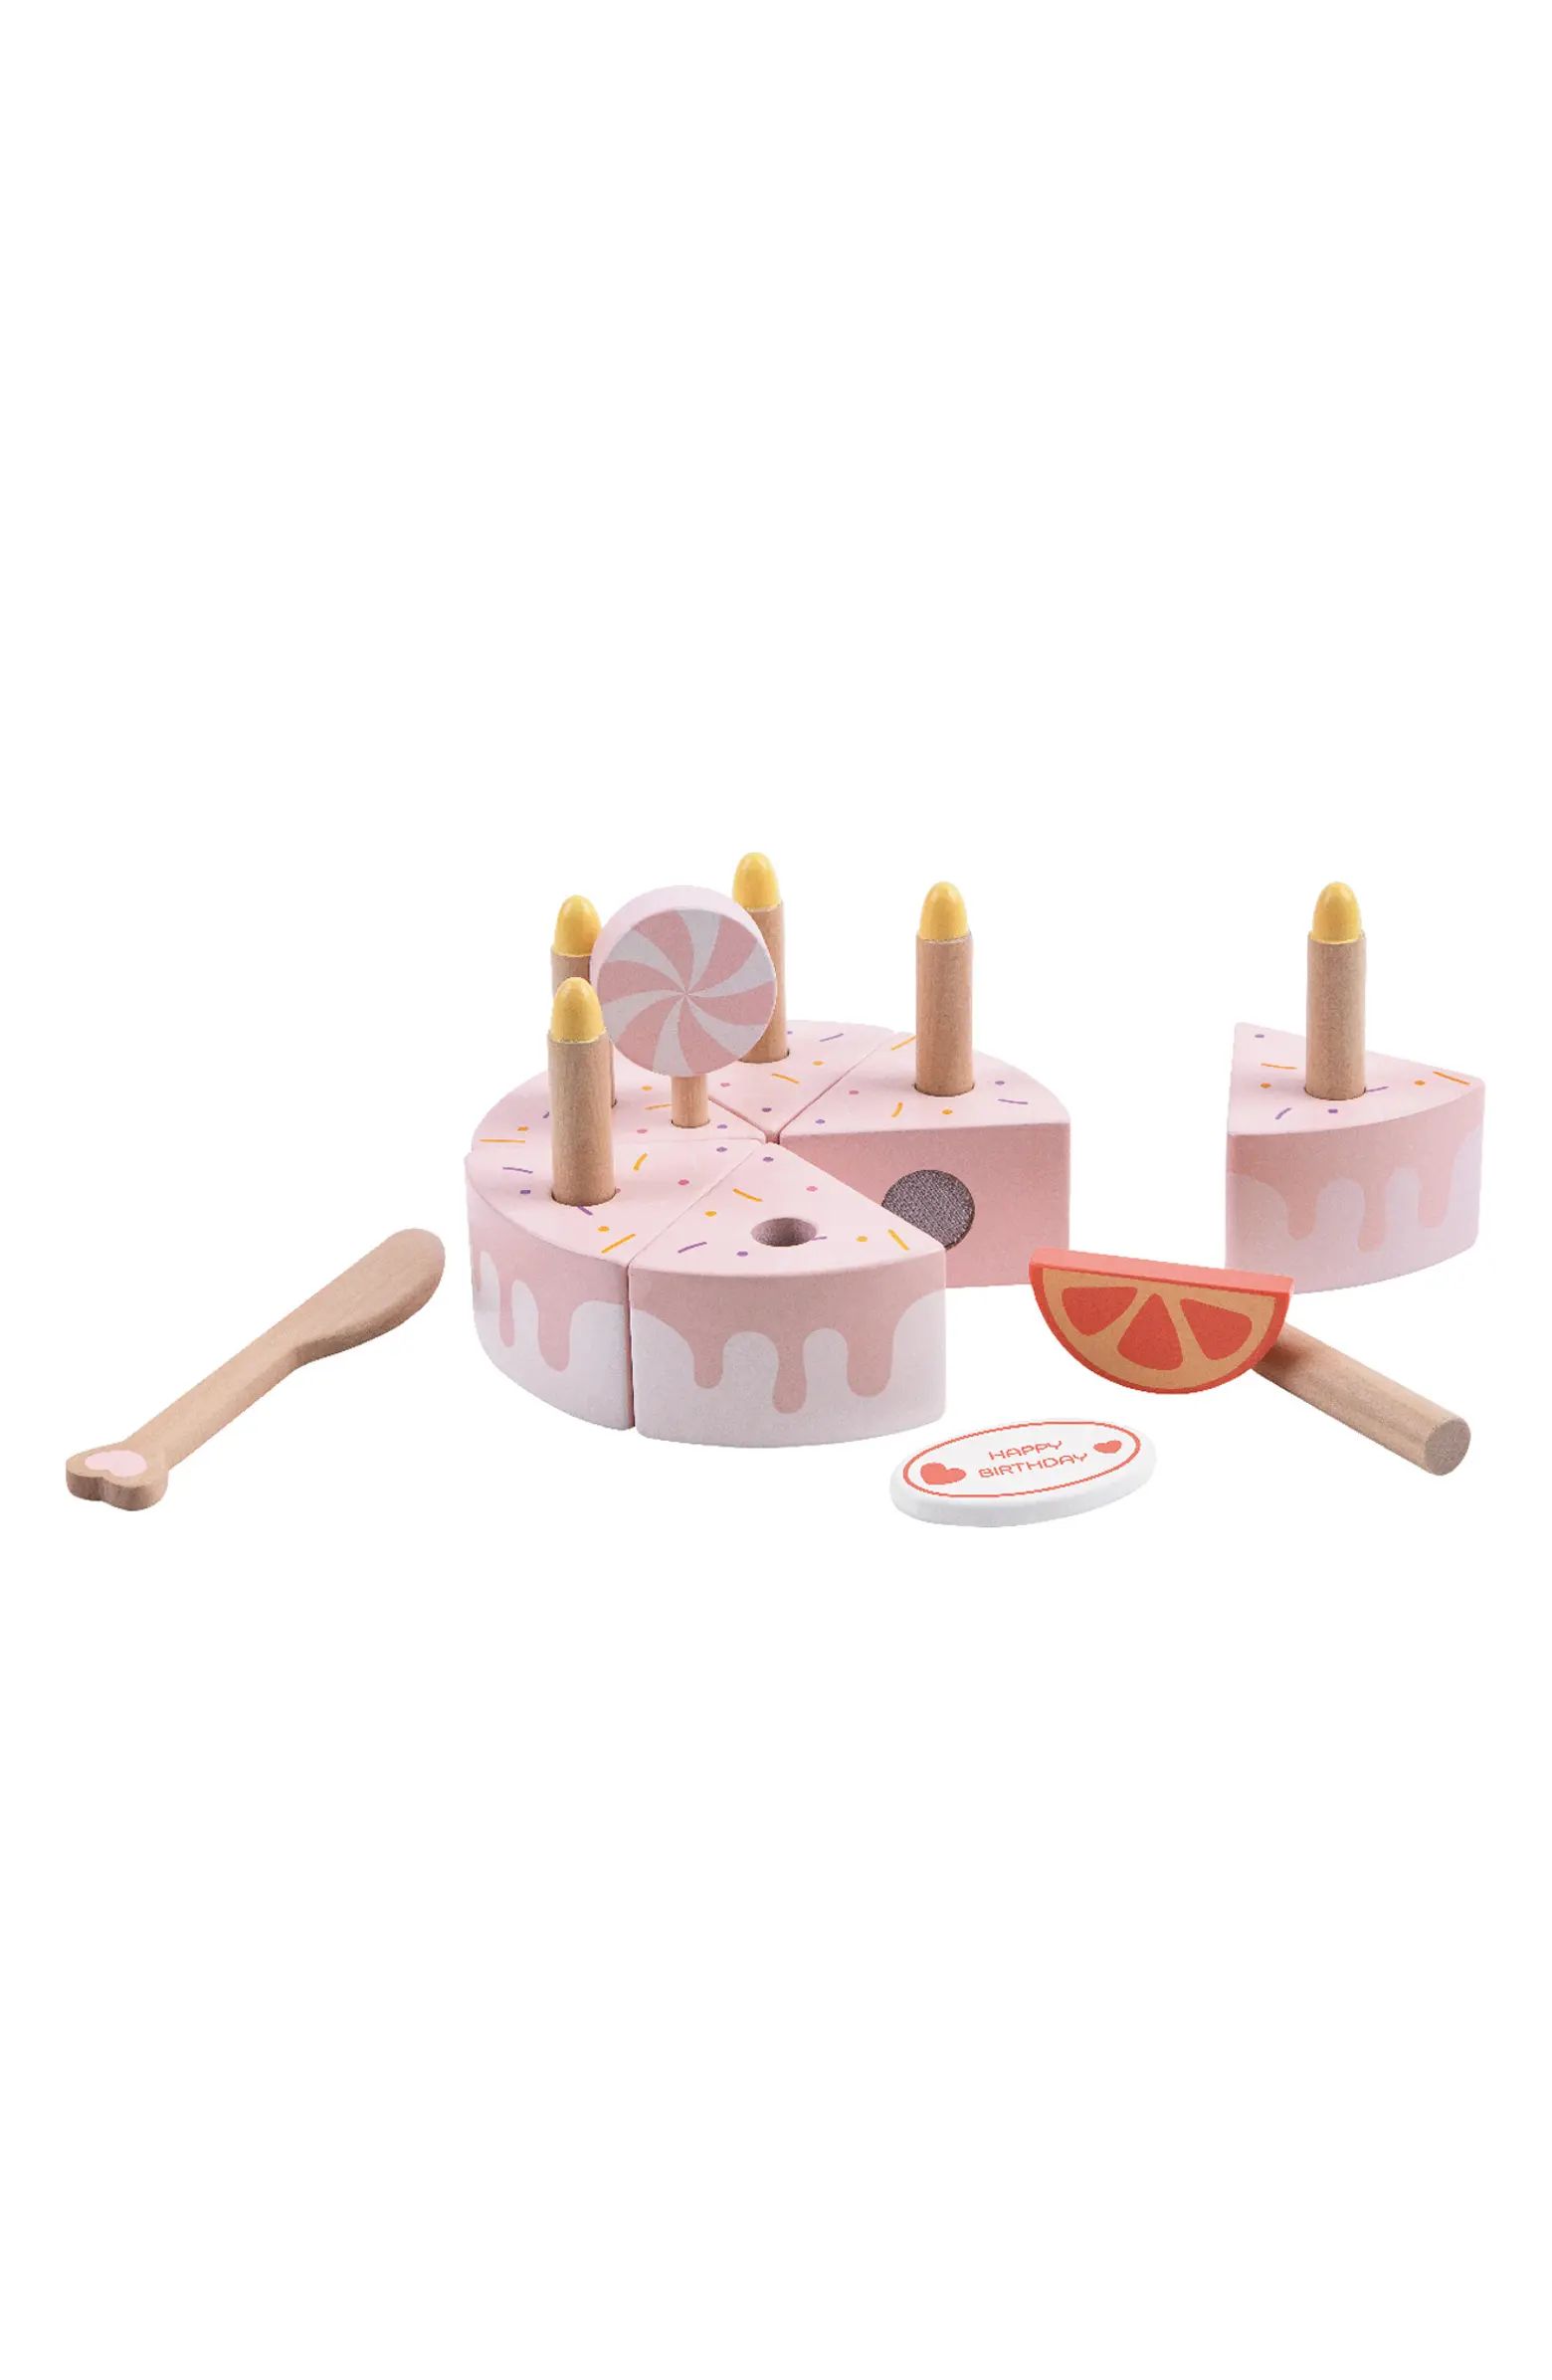 CLASSIC WORLD TOYS Birthday Cake Wooden Playset | Nordstromrack | Nordstrom Rack